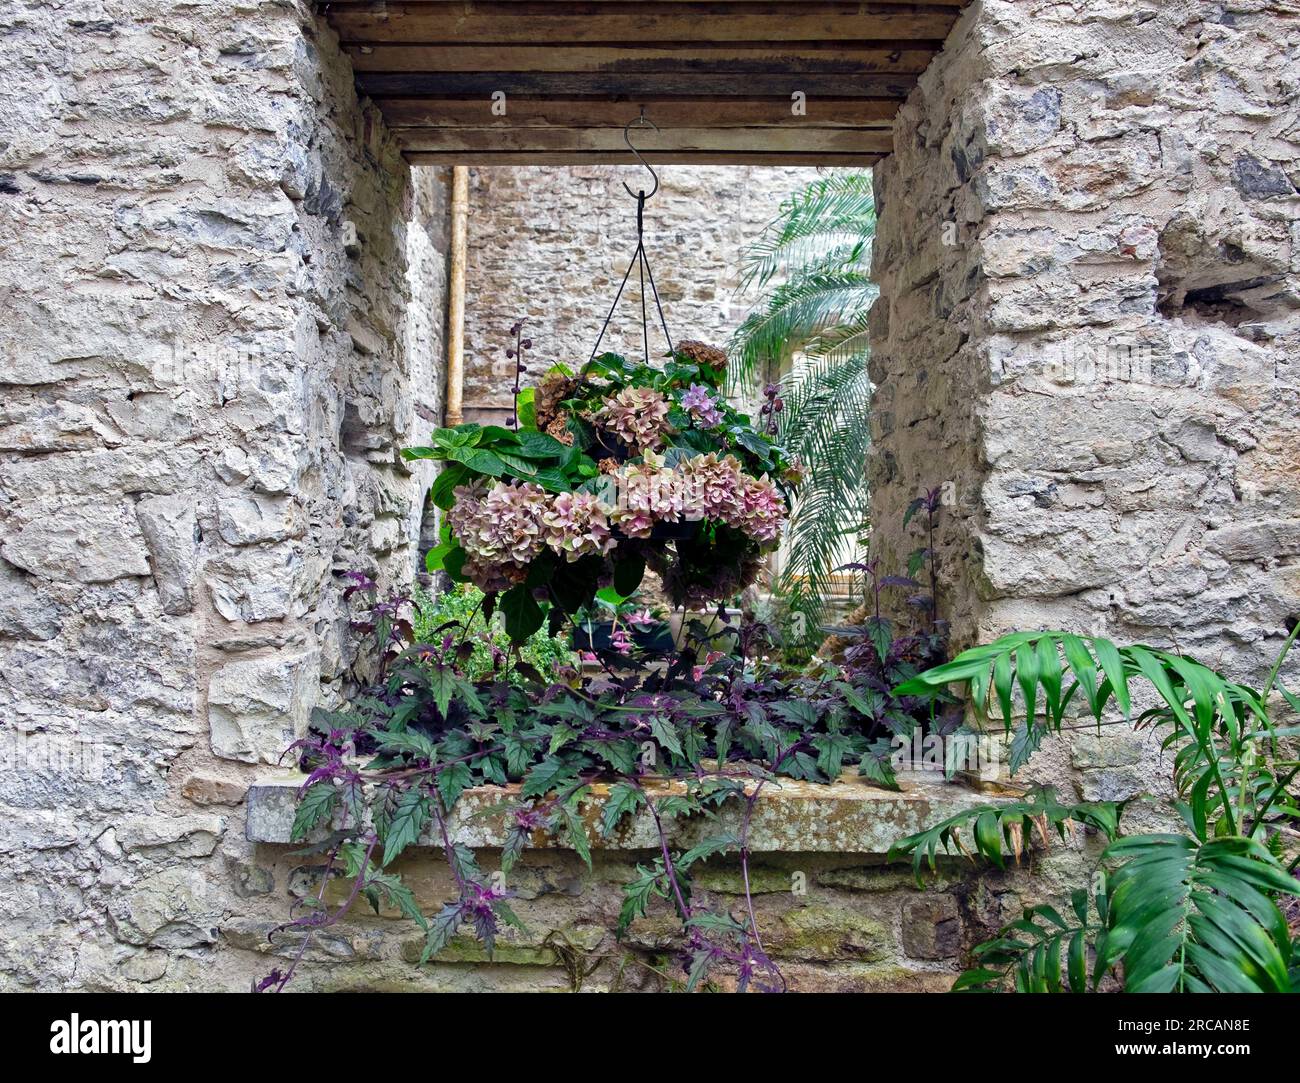 Tropical plants hydrangea plant in hanging basket and Gynura Aurantiaca  in stone wall at the Ninfarium at Aberglasney Garden Wales UK KATHY DEWITT Stock Photo